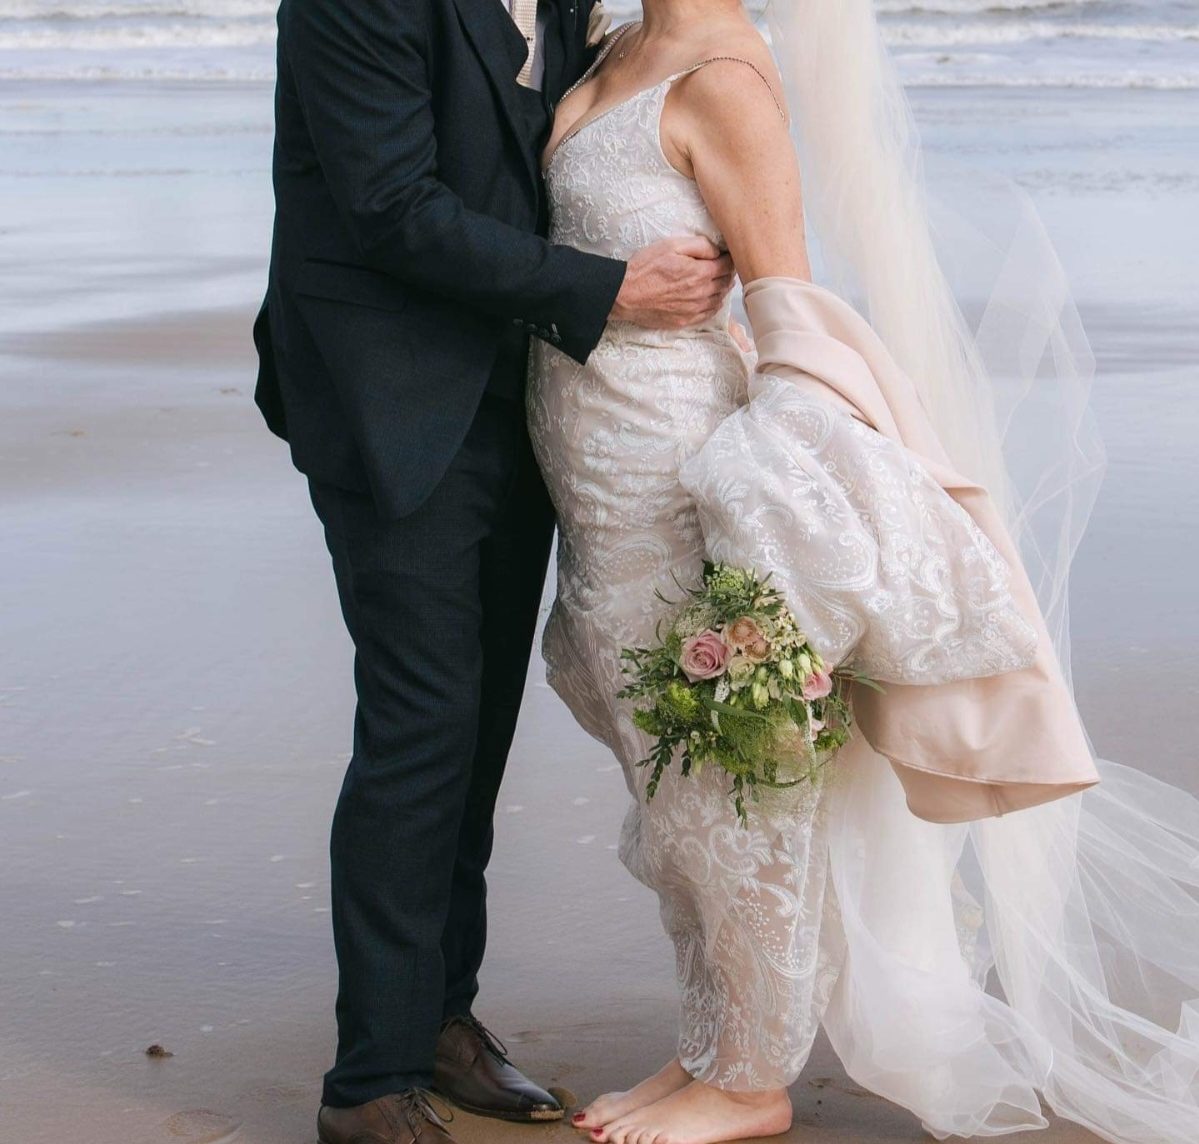 Wedding dress on the beach